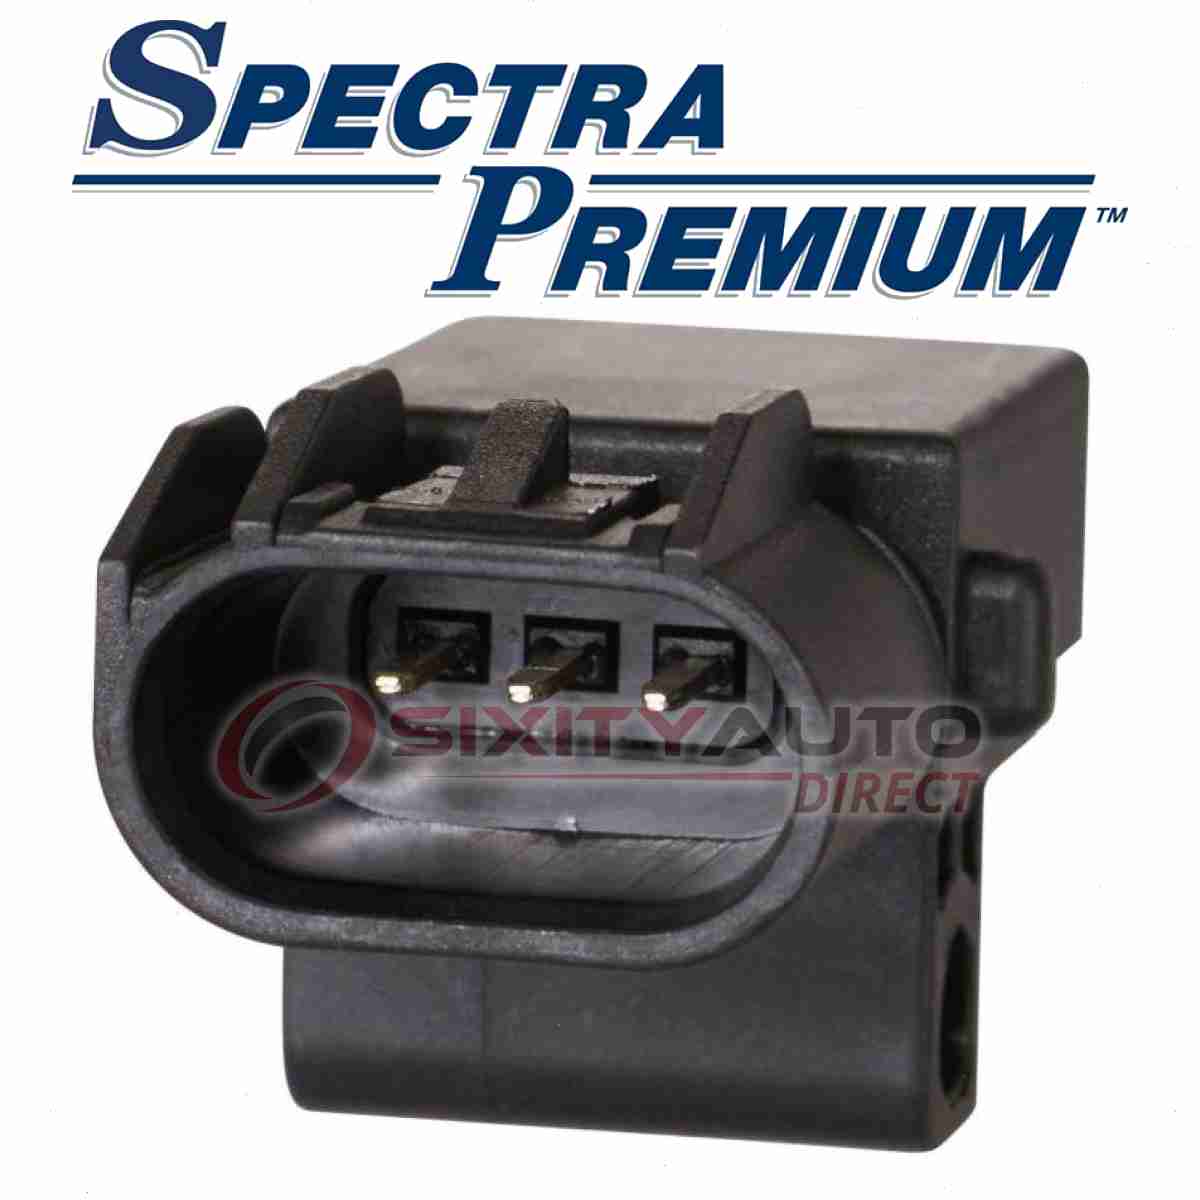 Spectra Premium Manifold Absolute Pressure Sensor for 2002-2003 Dodge Ram pg